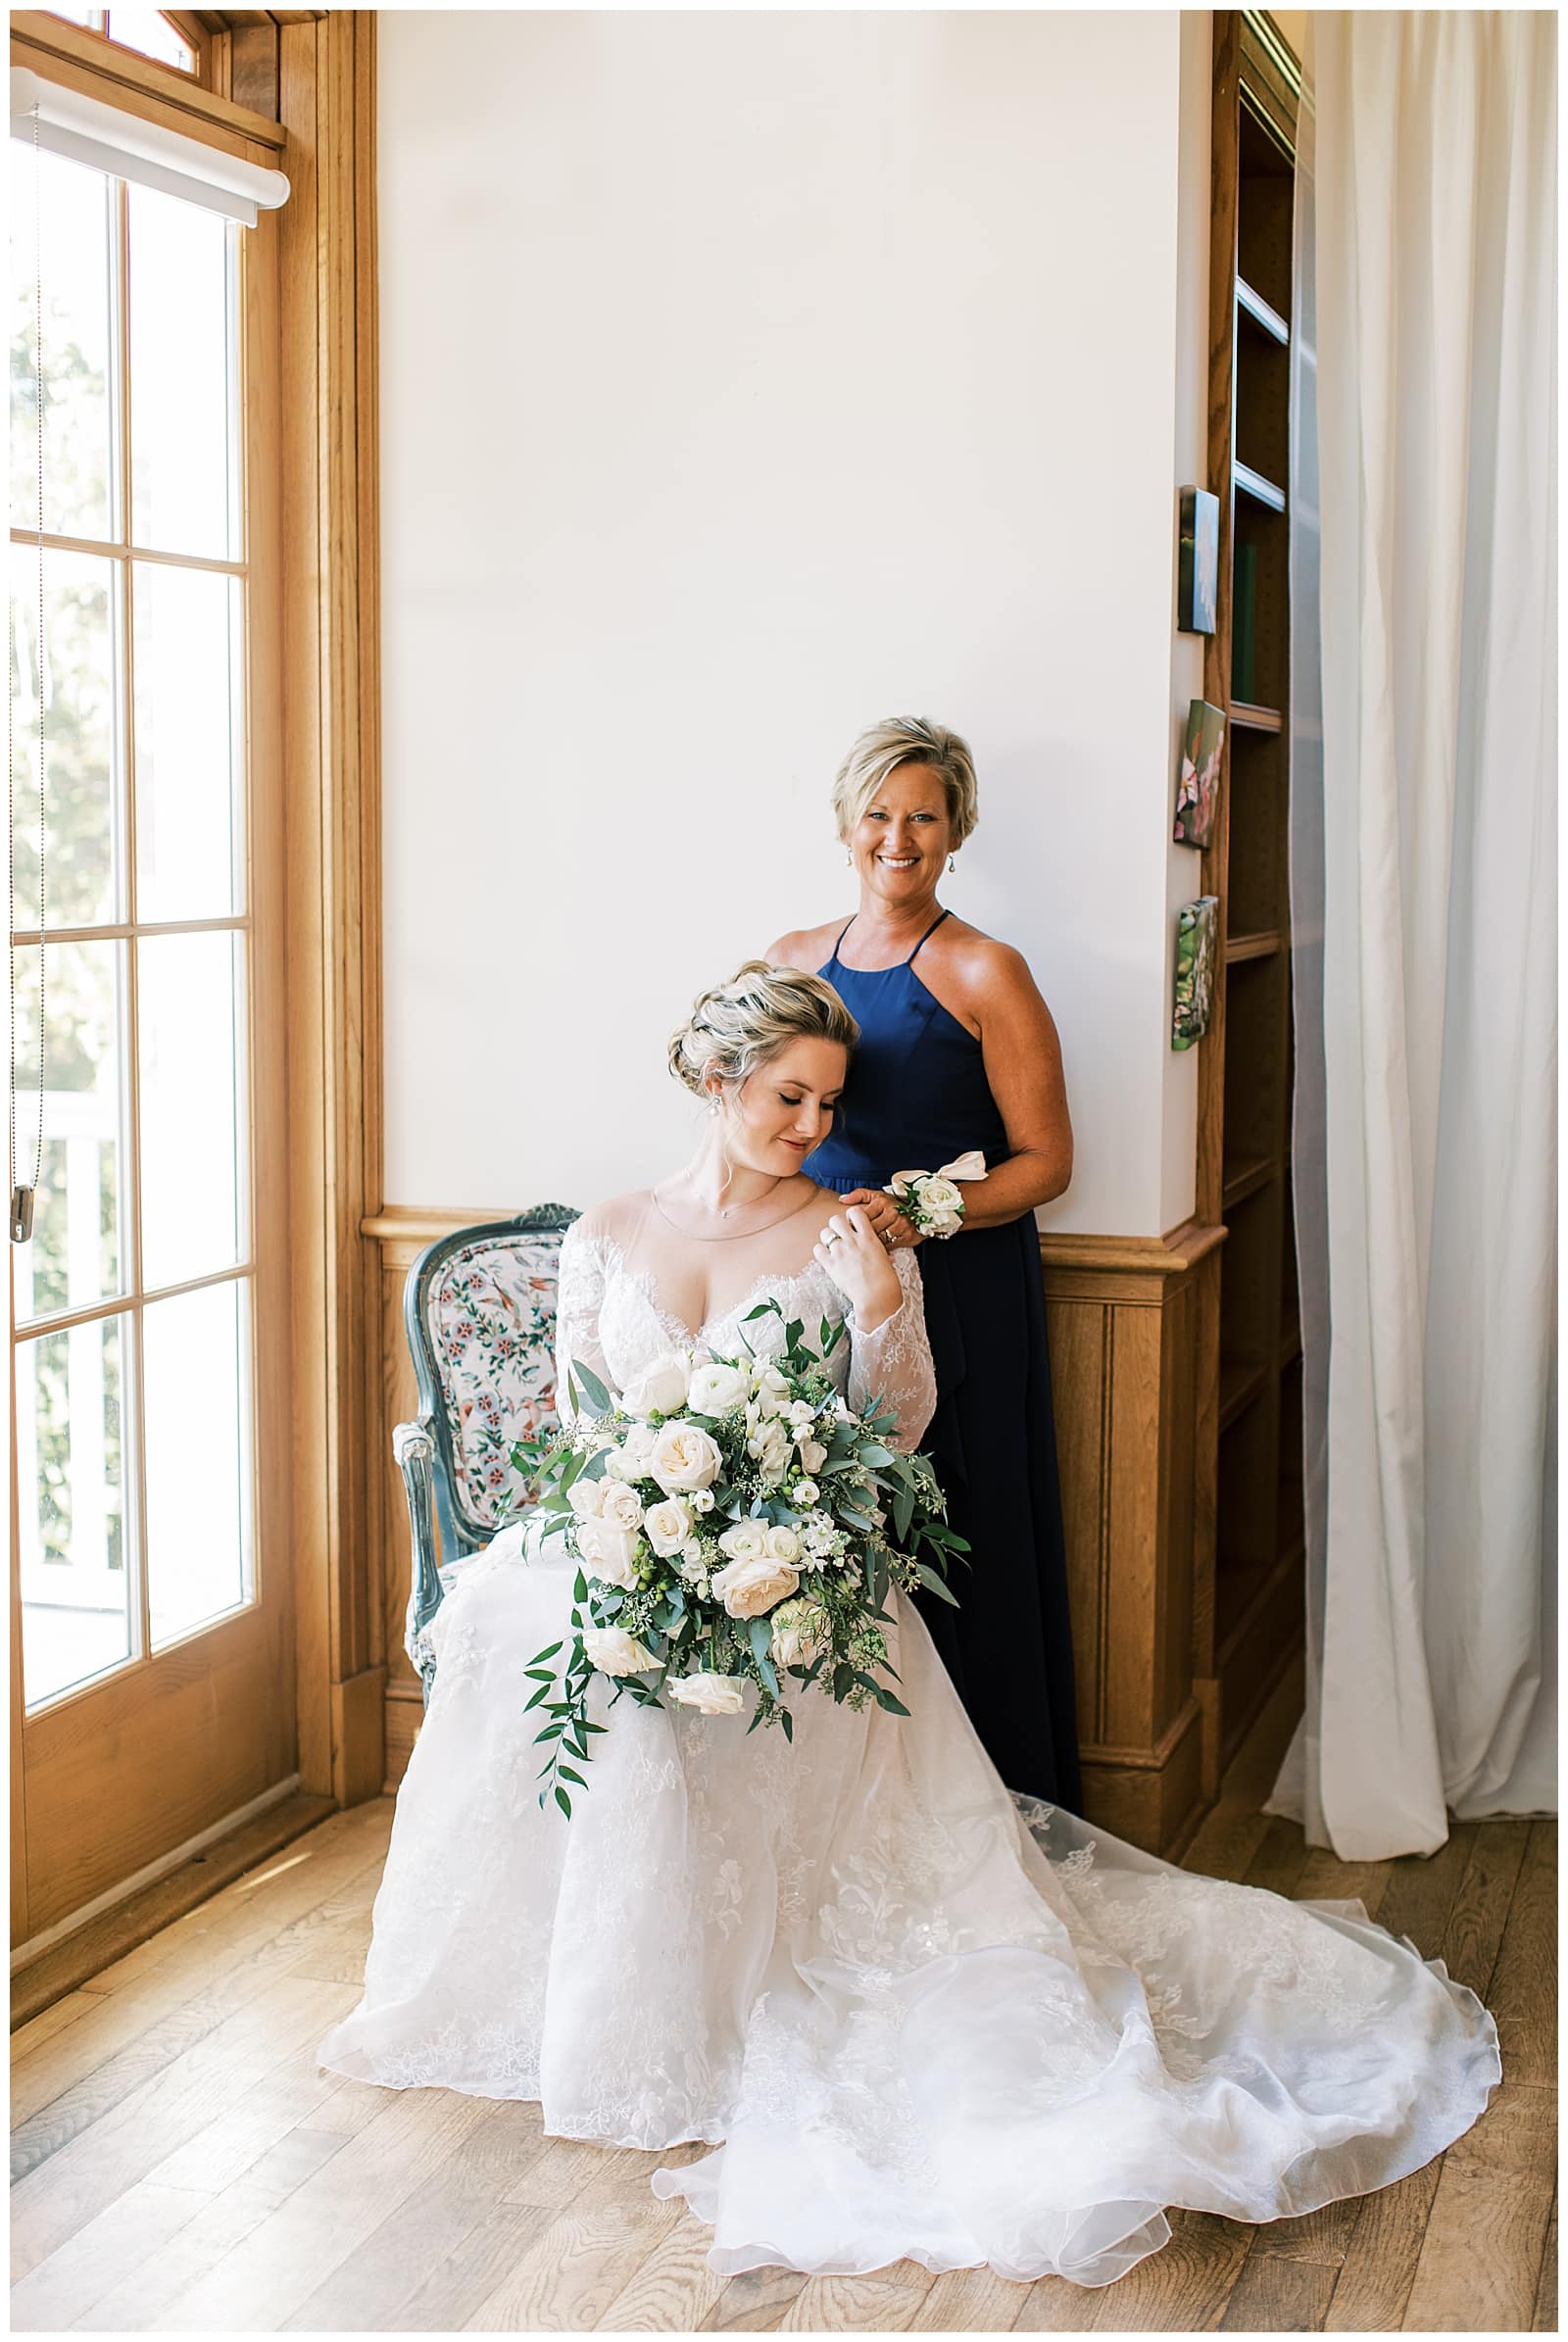 Danielle-Defayette-Photography-Castle-Hill-Cider-Charlottesville-Wedding-2020_0031.jpg